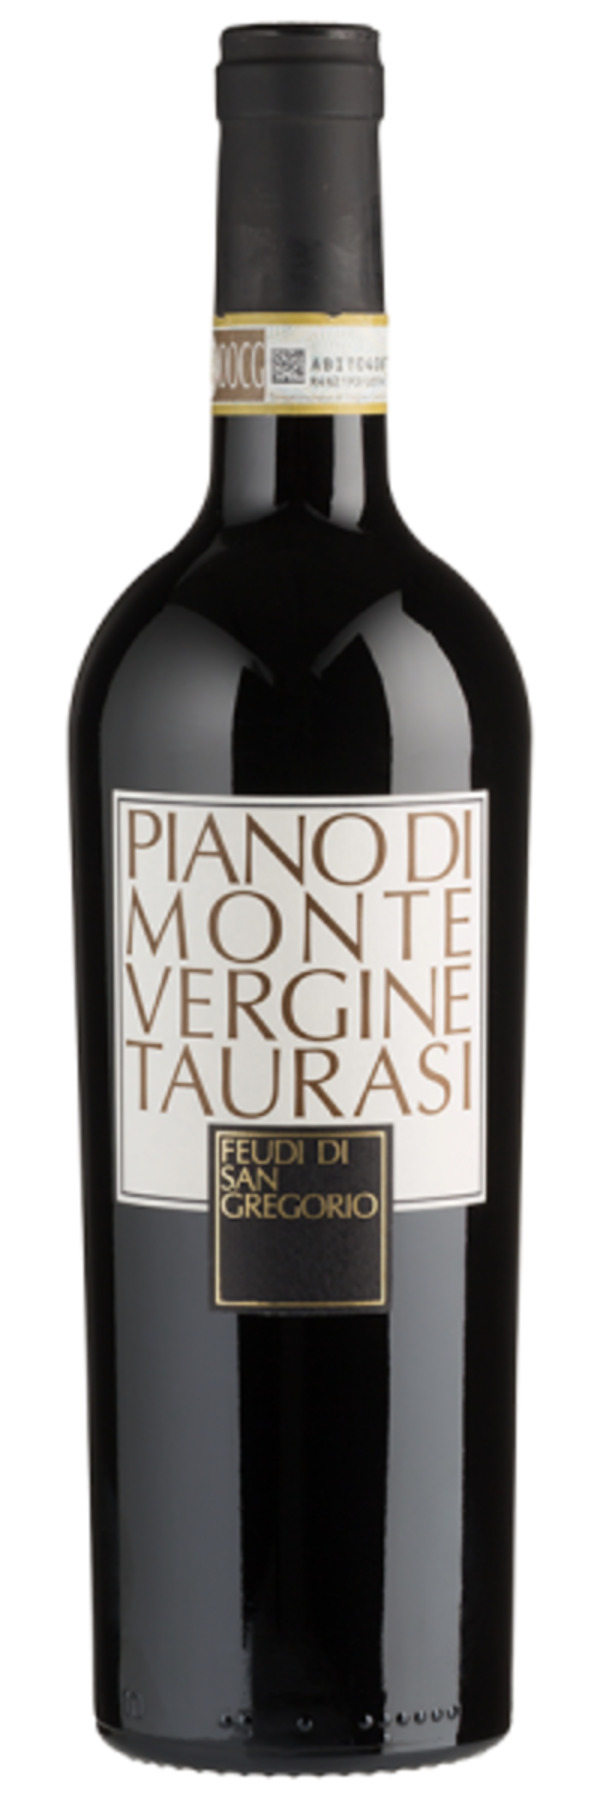 Bild 1 von Piano di Montevergine Taurasi Riserva - 2014 - Feudi di San Gregorio - Italienischer Rotwein